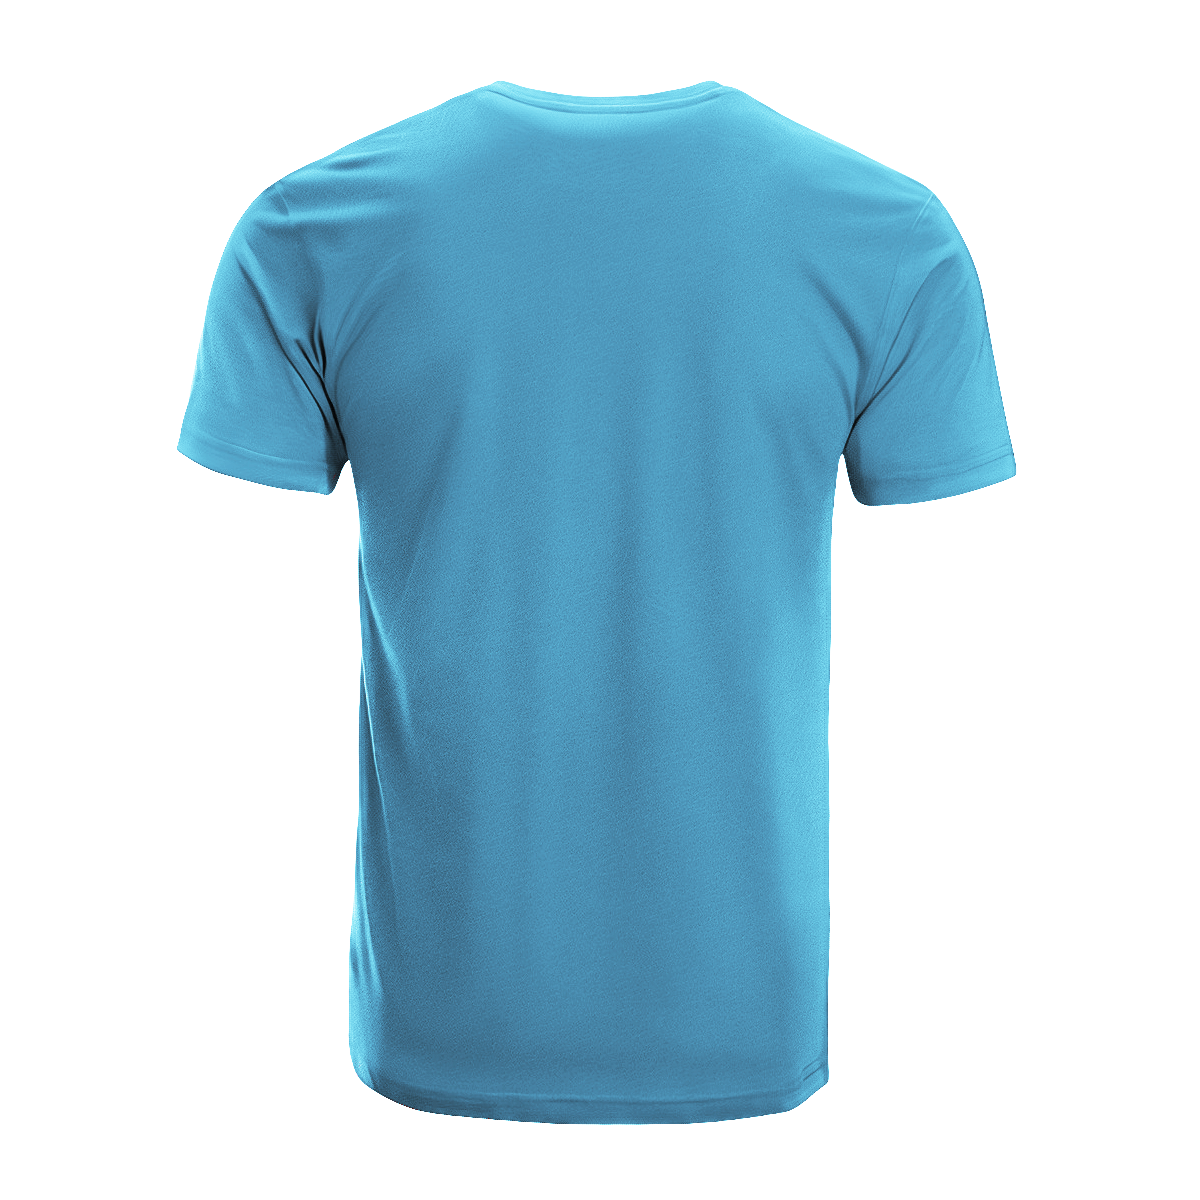 Lennox (Lennox Kincaid) Tartan Crest T-shirt - I'm not yelling style